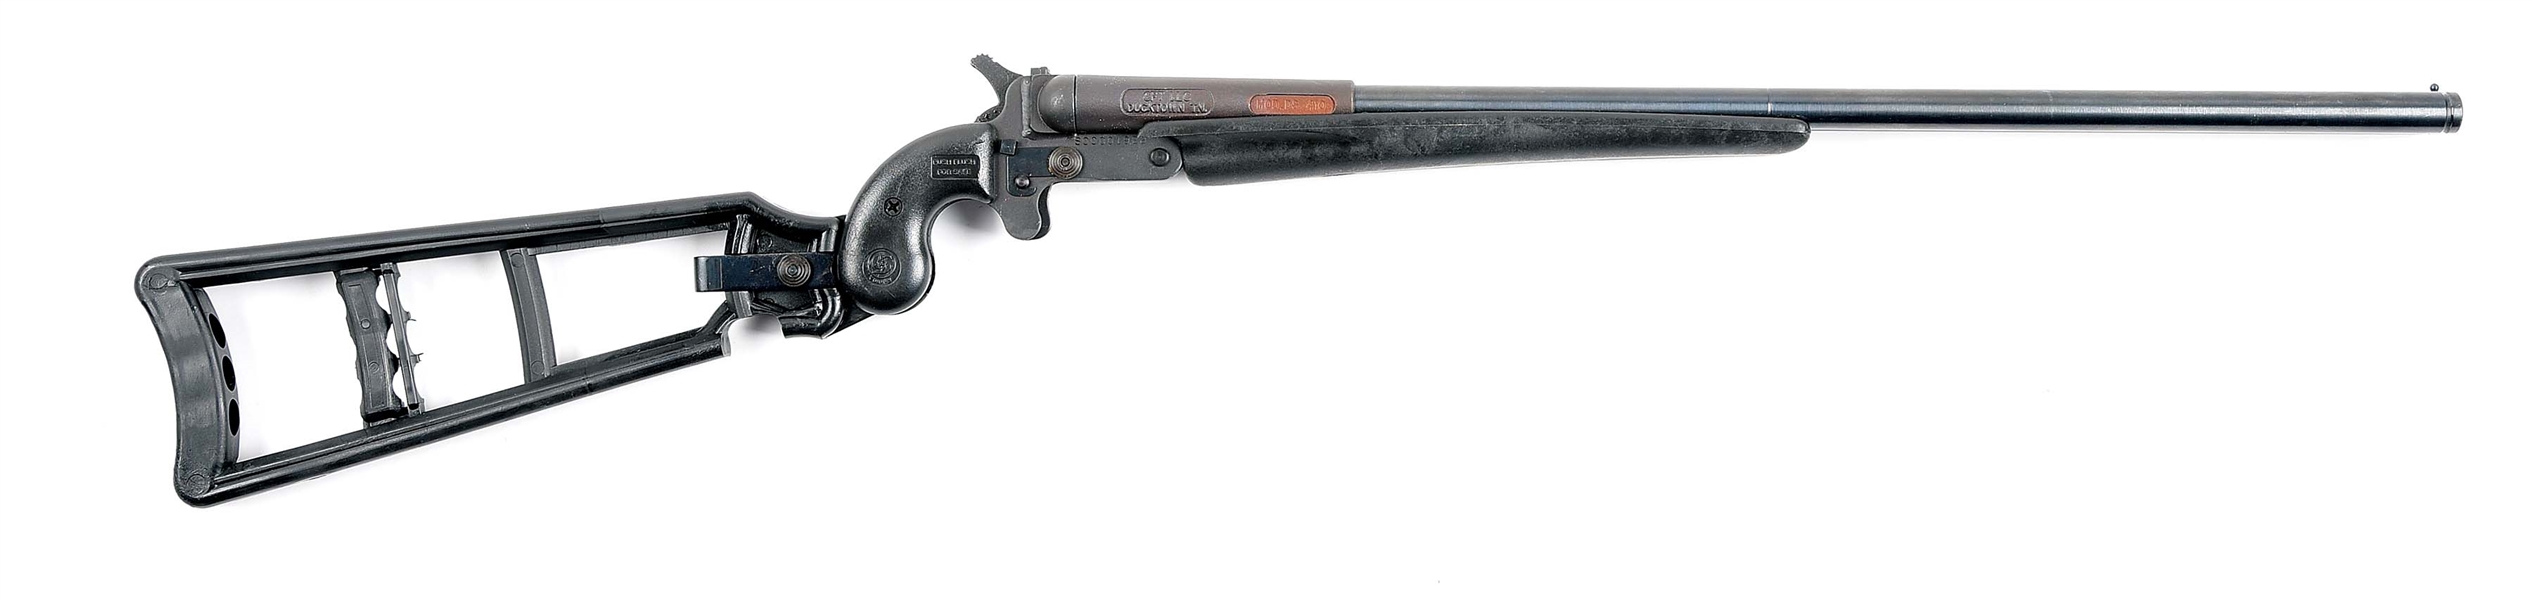 (M) COBRAY MODEL DS .410 BORE SIDE BY SIDE SHOTGUN. 